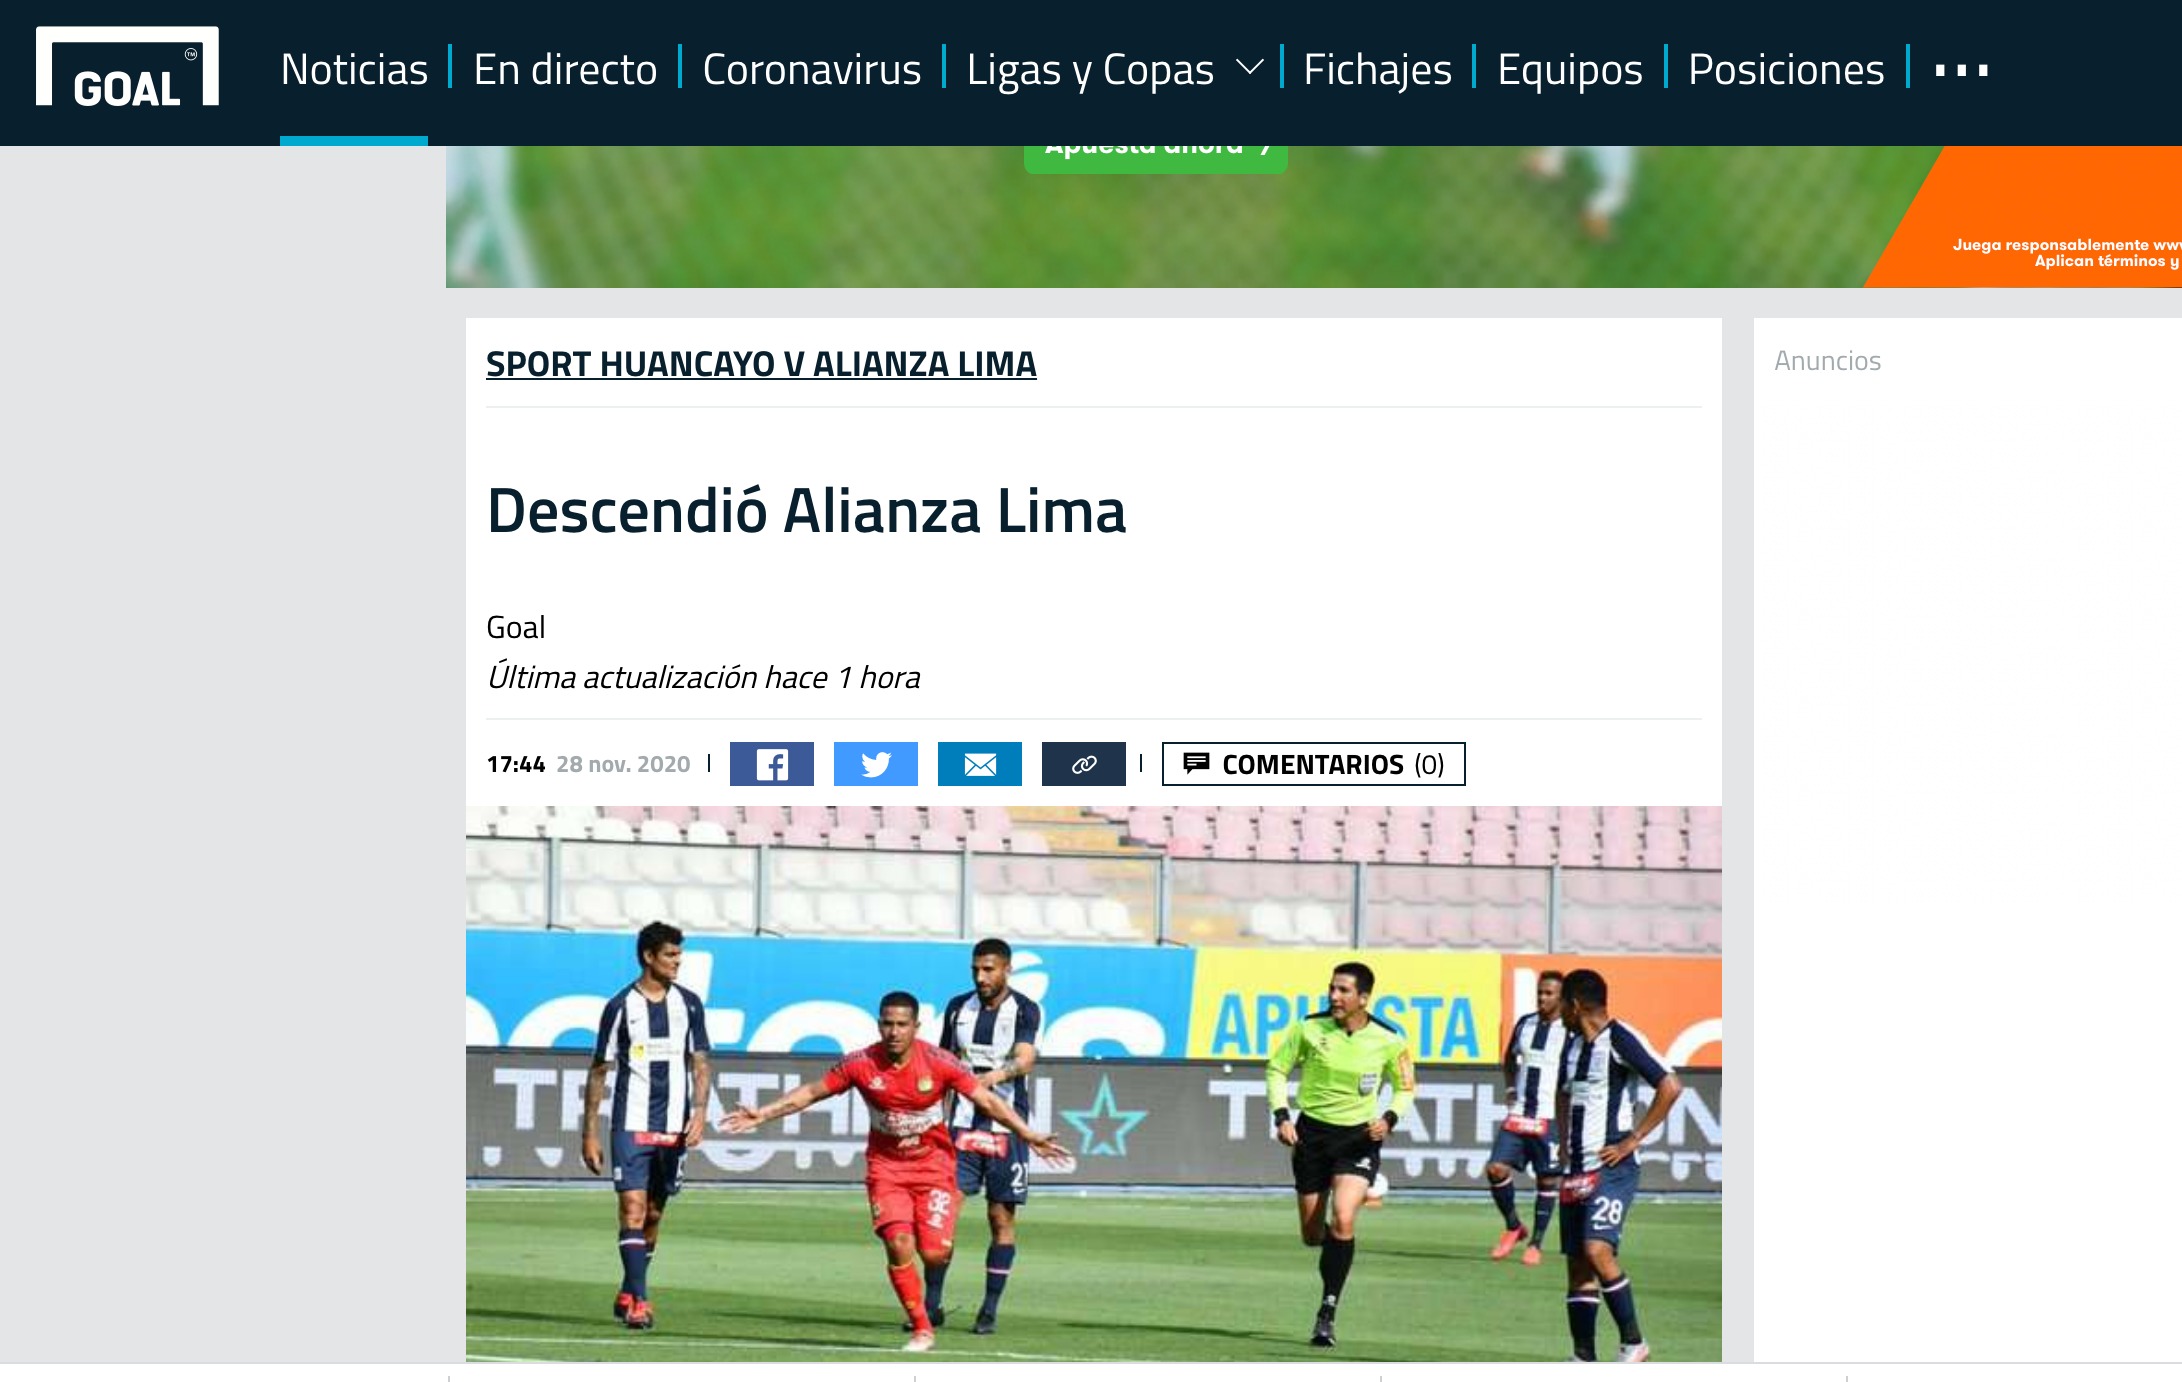 Alianza Lima descendió a Segunda División.